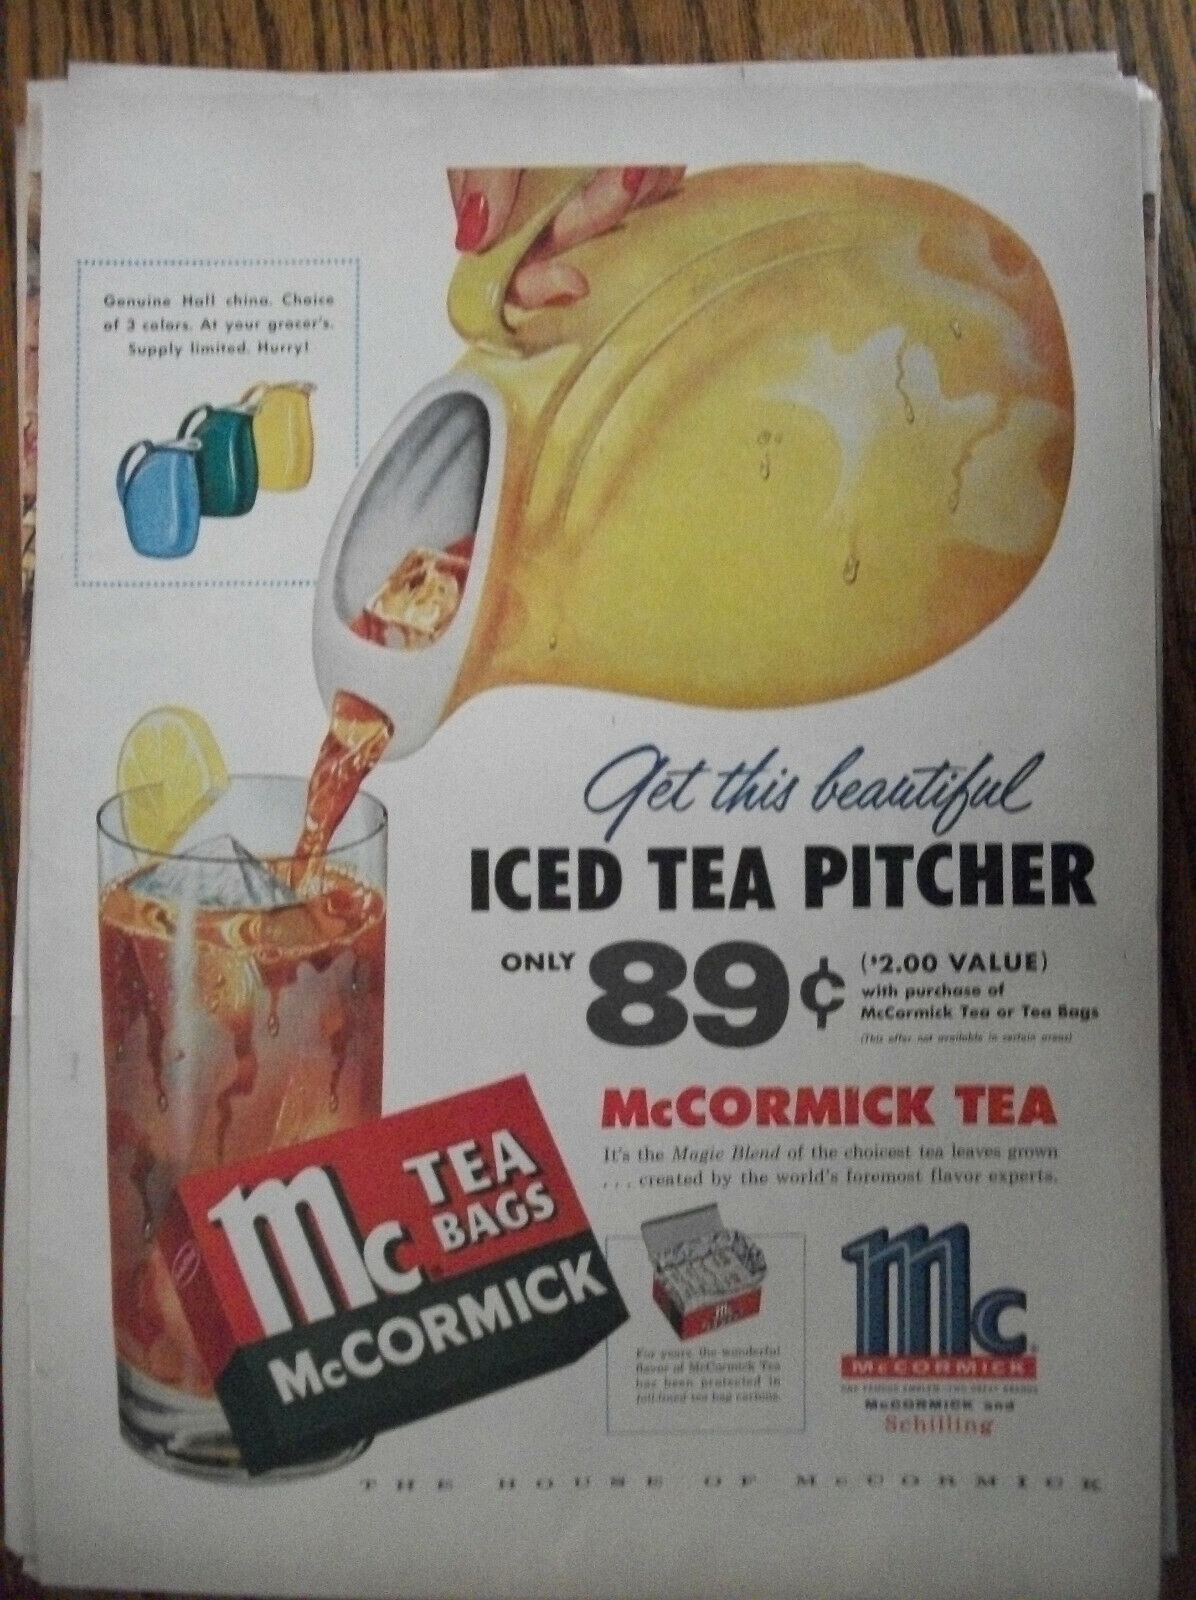 VTG 1955 Orig Magazine Ad McCormick Tea For Beautiful Iced Tea Pitcher $2 Value